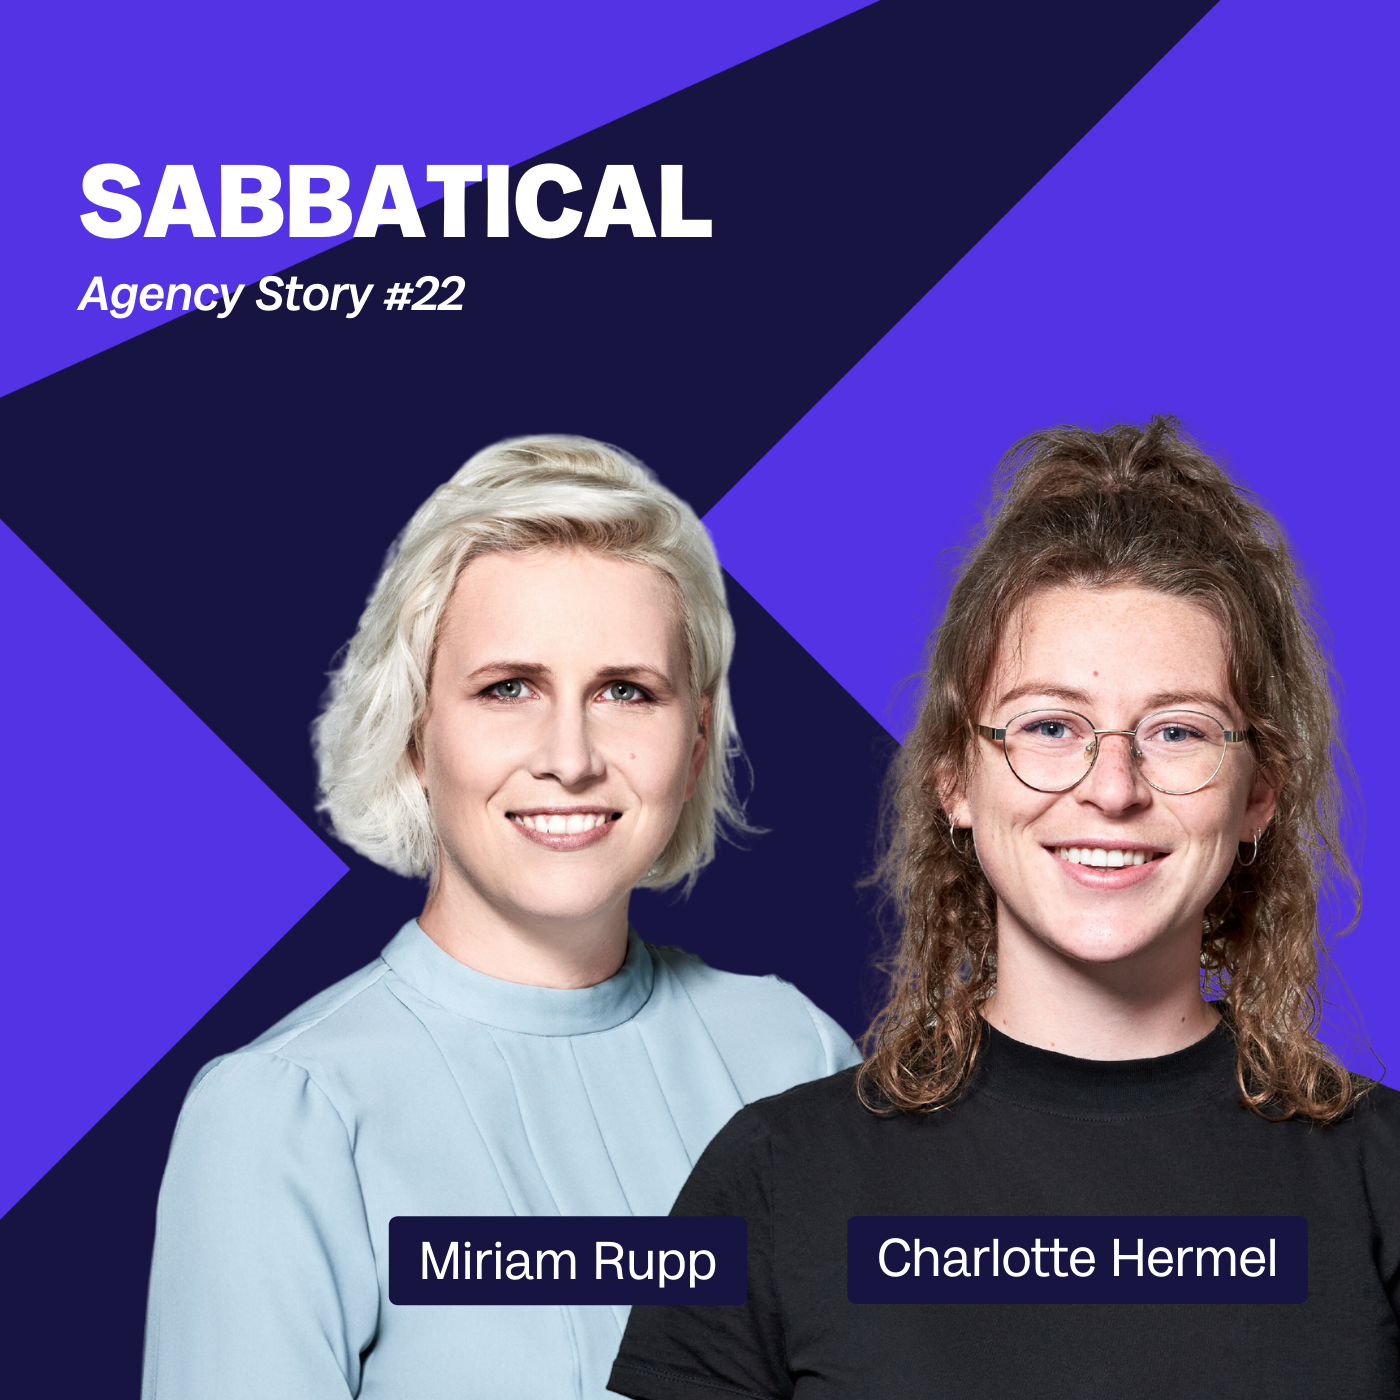 Agency Stories #22 – Sabbatical